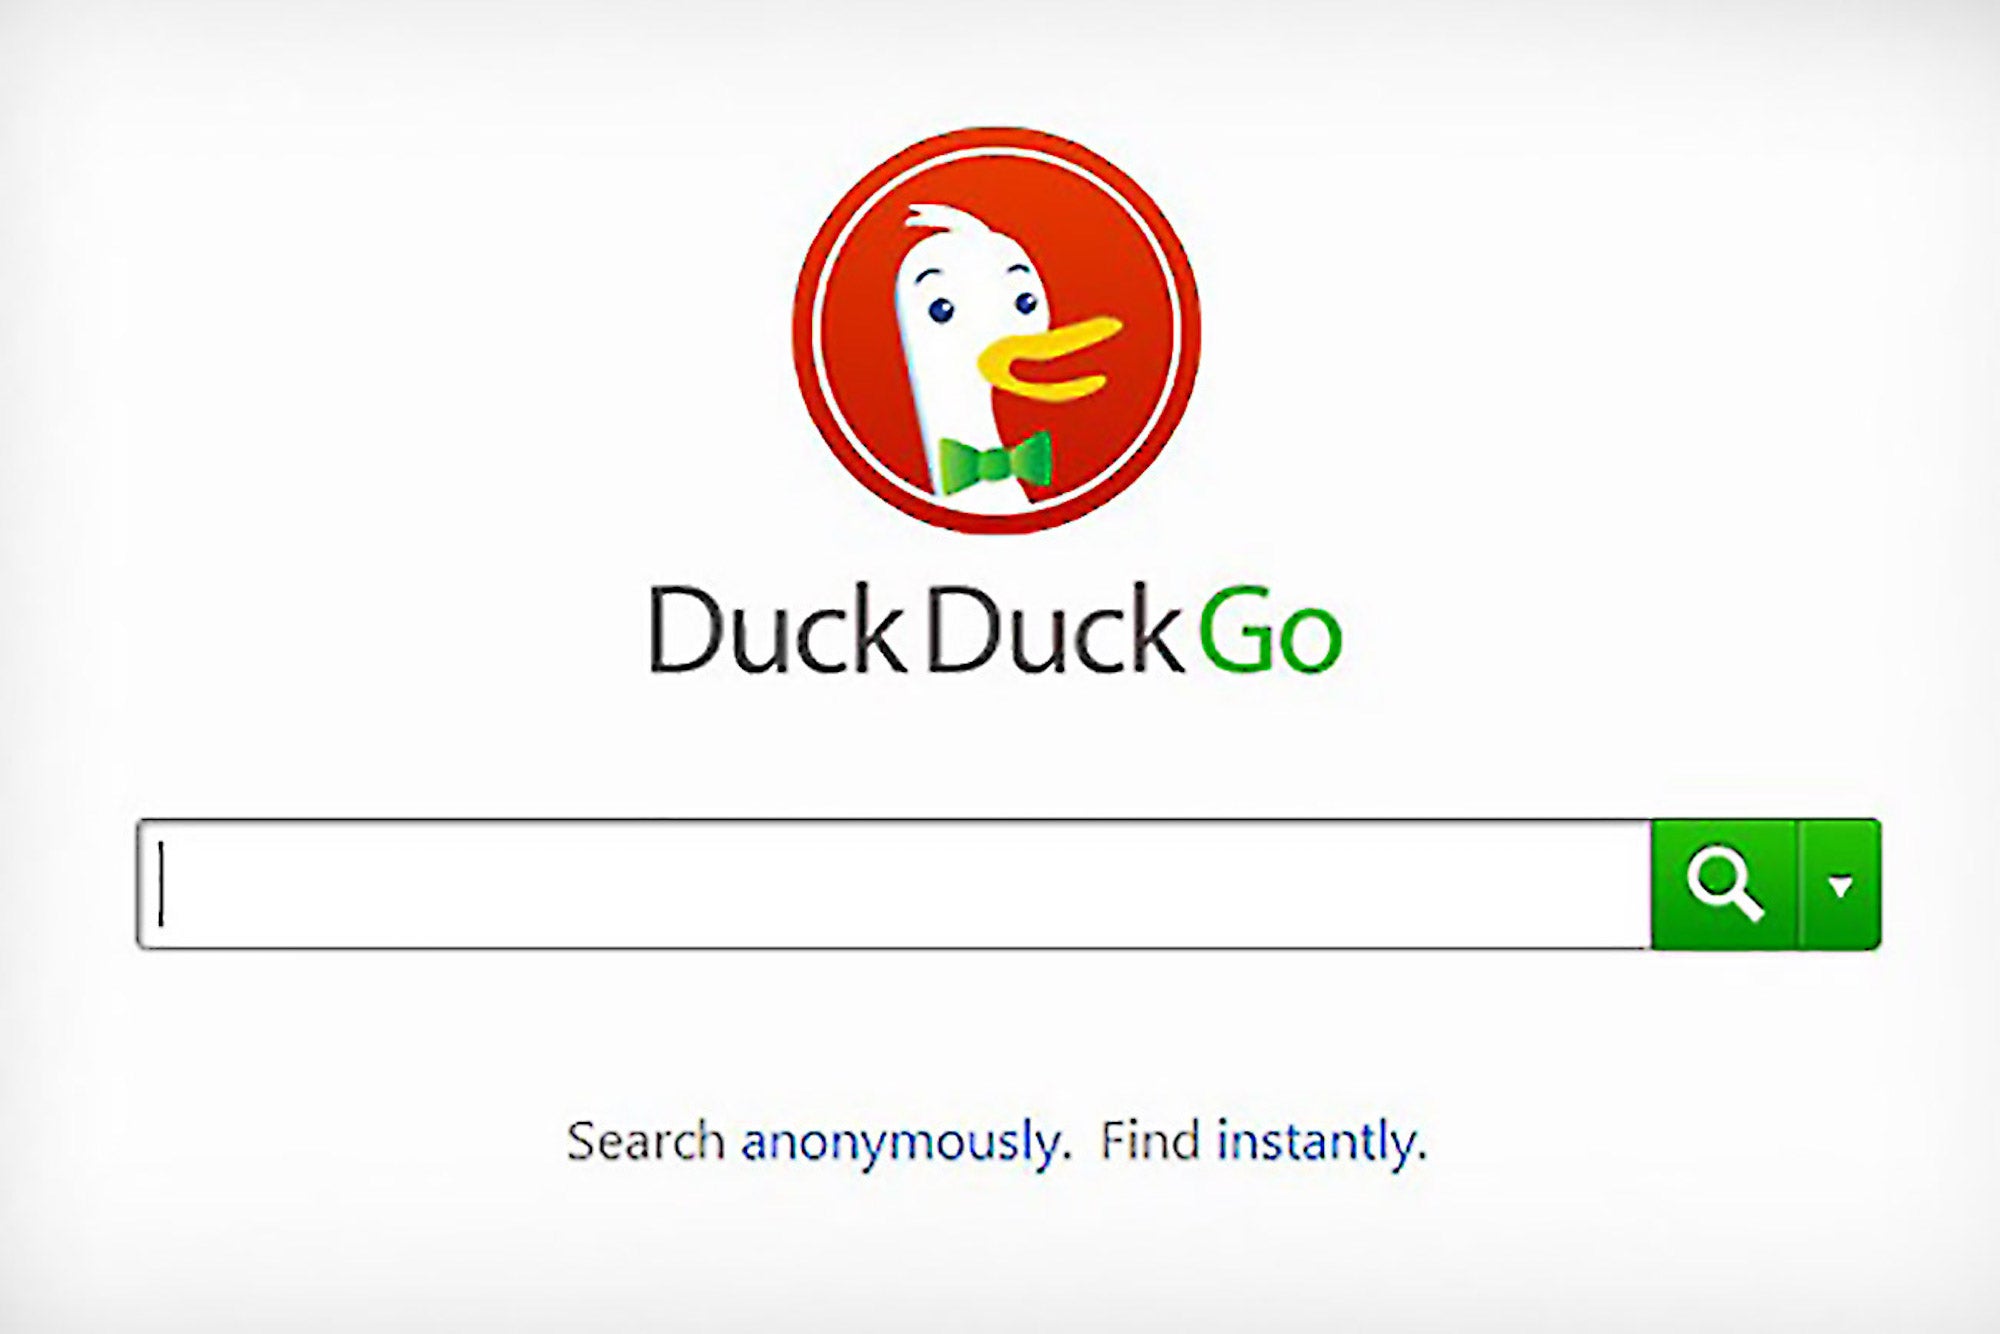 DuckDuckGo integra inteligência artificial, mas promete usá-la de forma diferente do Google e Bing